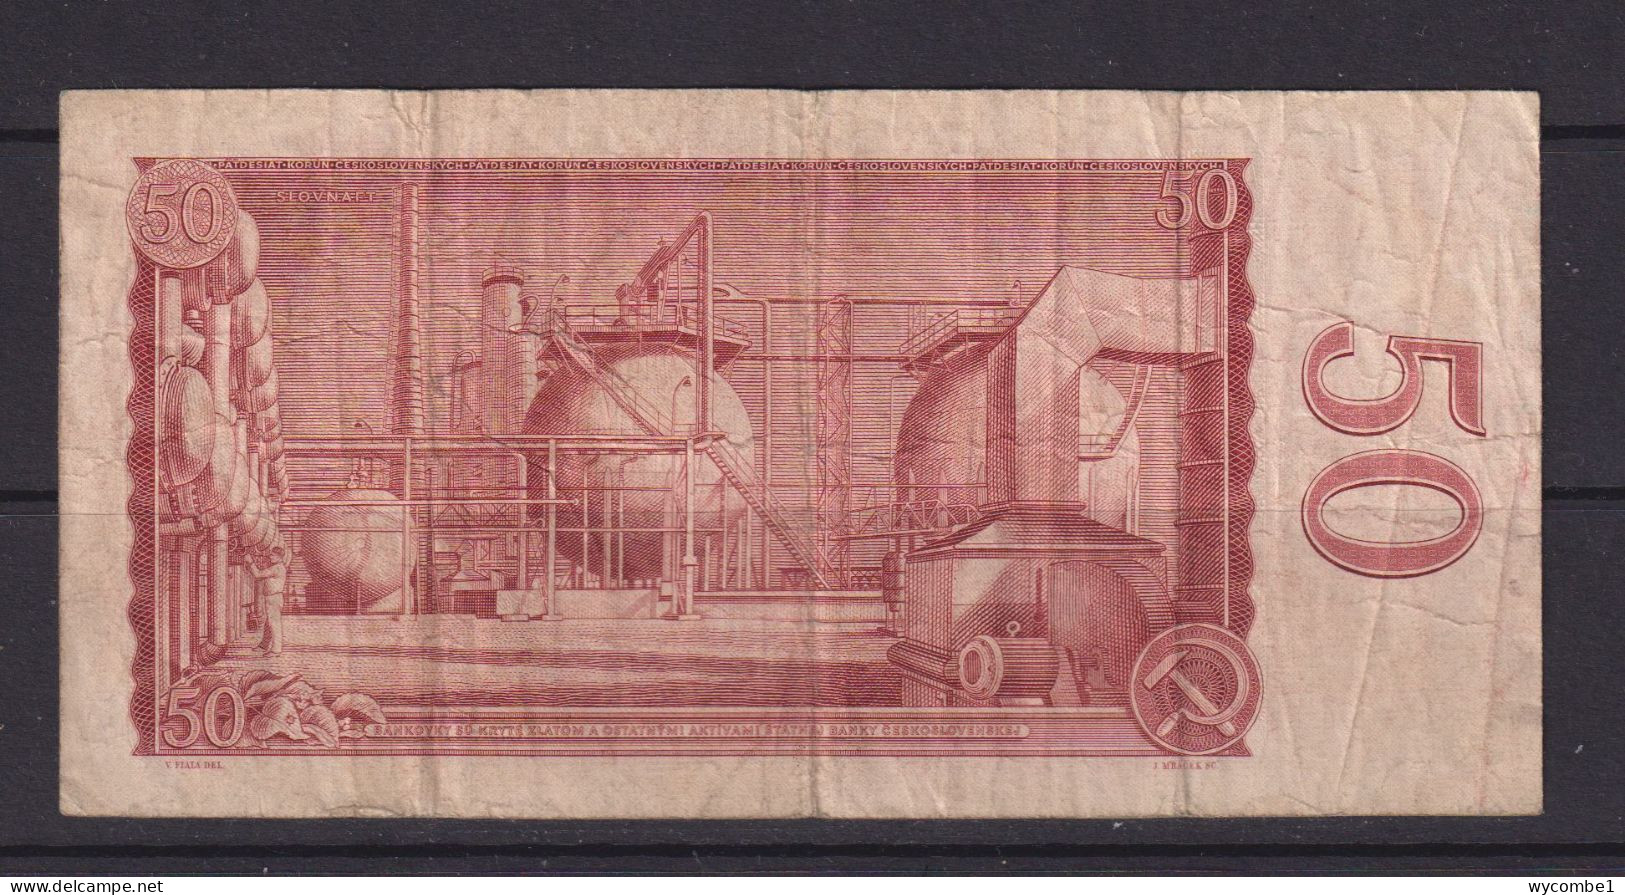 CZECHOSLOVAKIA -  1964 50 Korun Circulated Banknote - Czechoslovakia